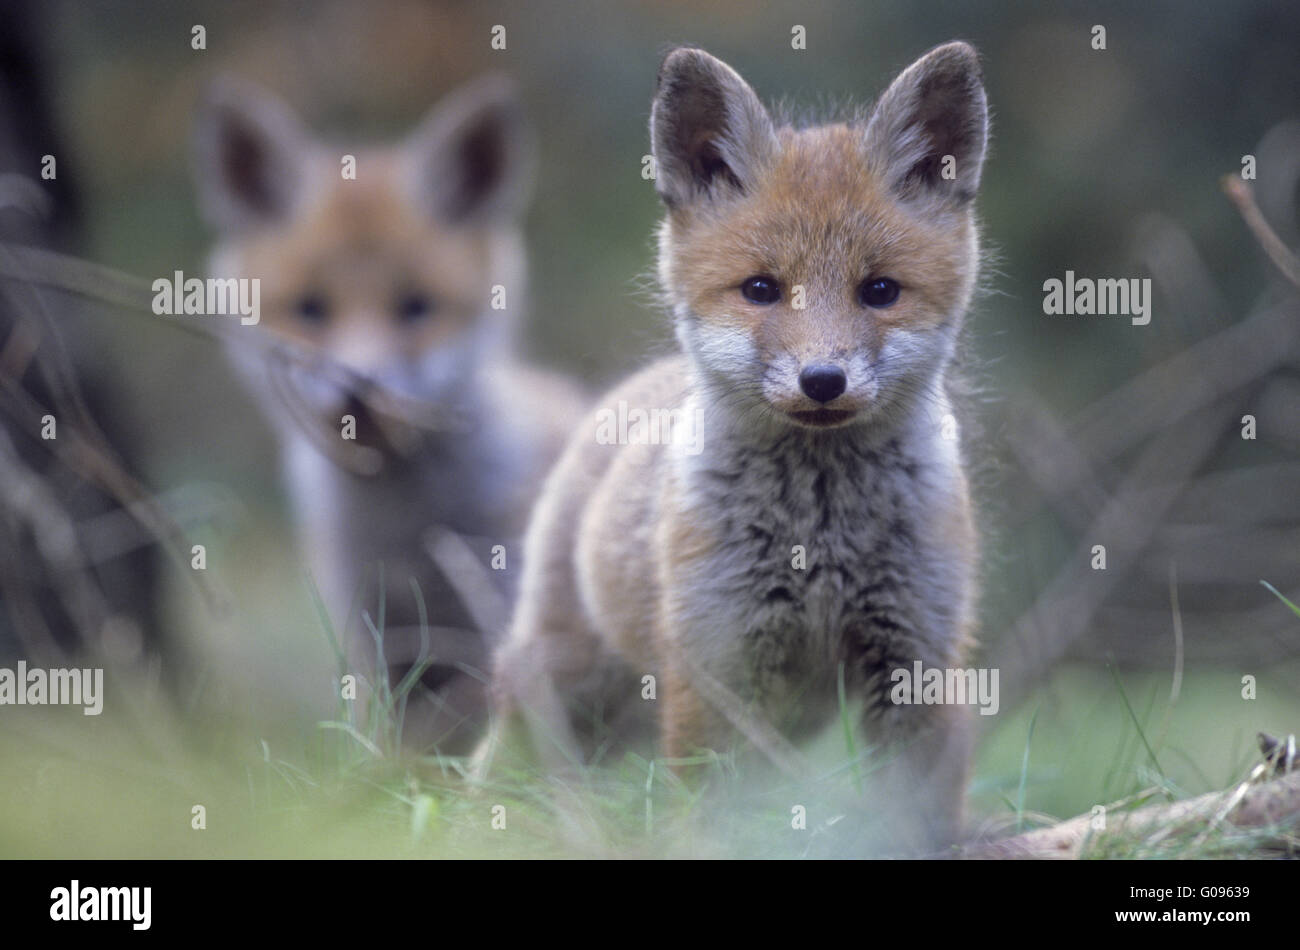 Kits de Red Fox observando atentamente el fotógrafo Foto de stock